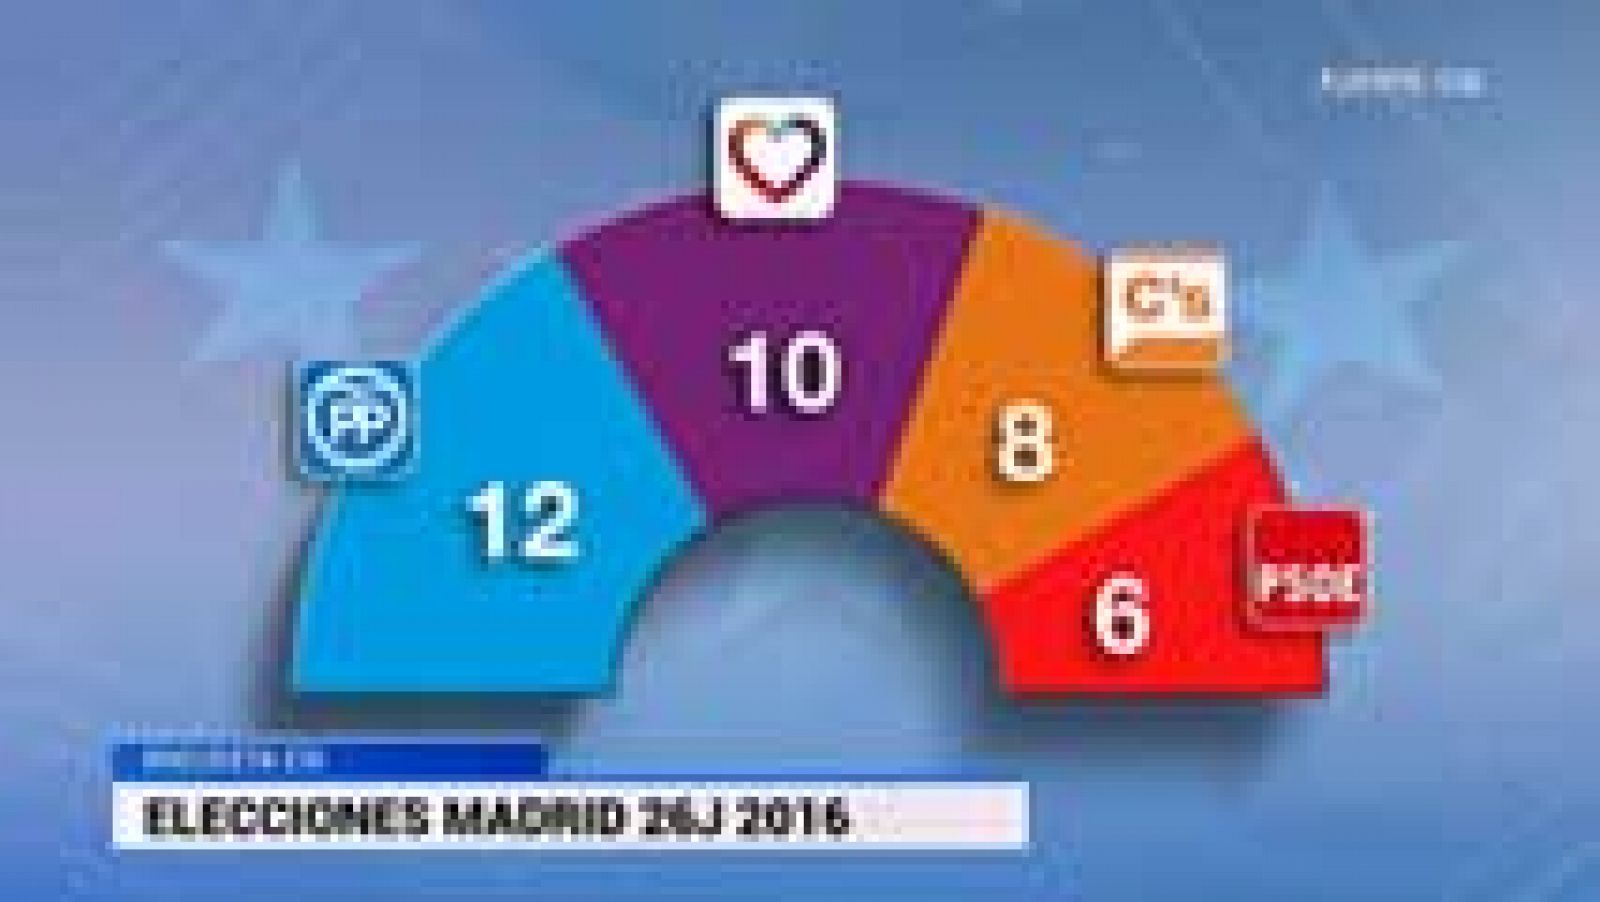 Informativo de Madrid: Informativo de Madrid - 09/06/16 | RTVE Play